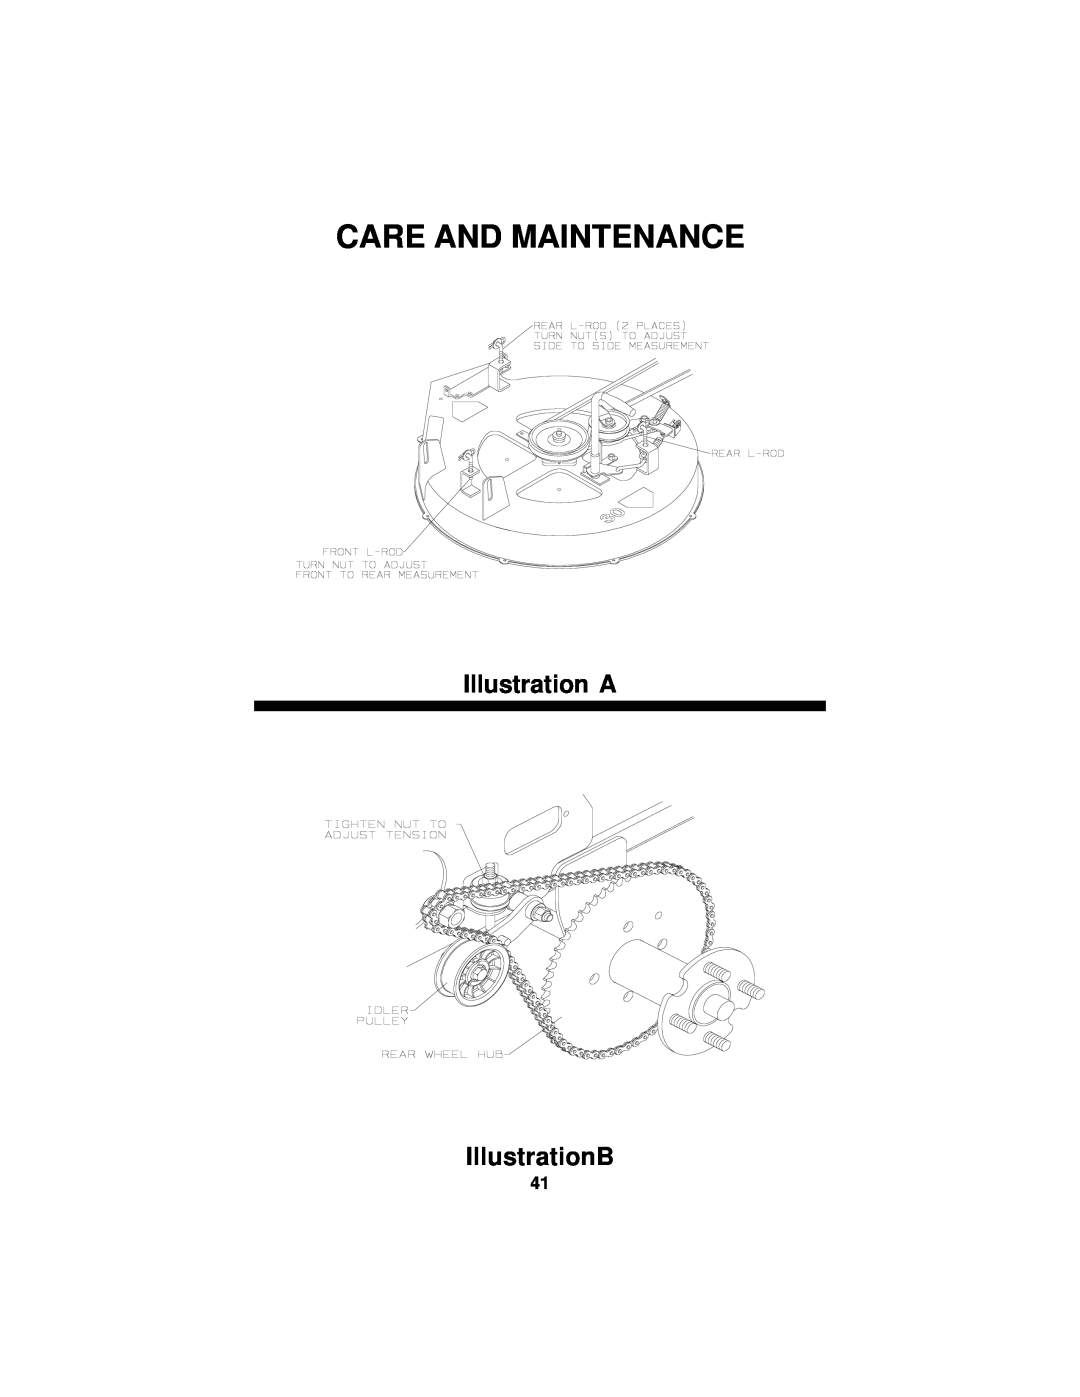 Dixon 14295-0804 manual Illustration A IllustrationB, Care And Maintenance 